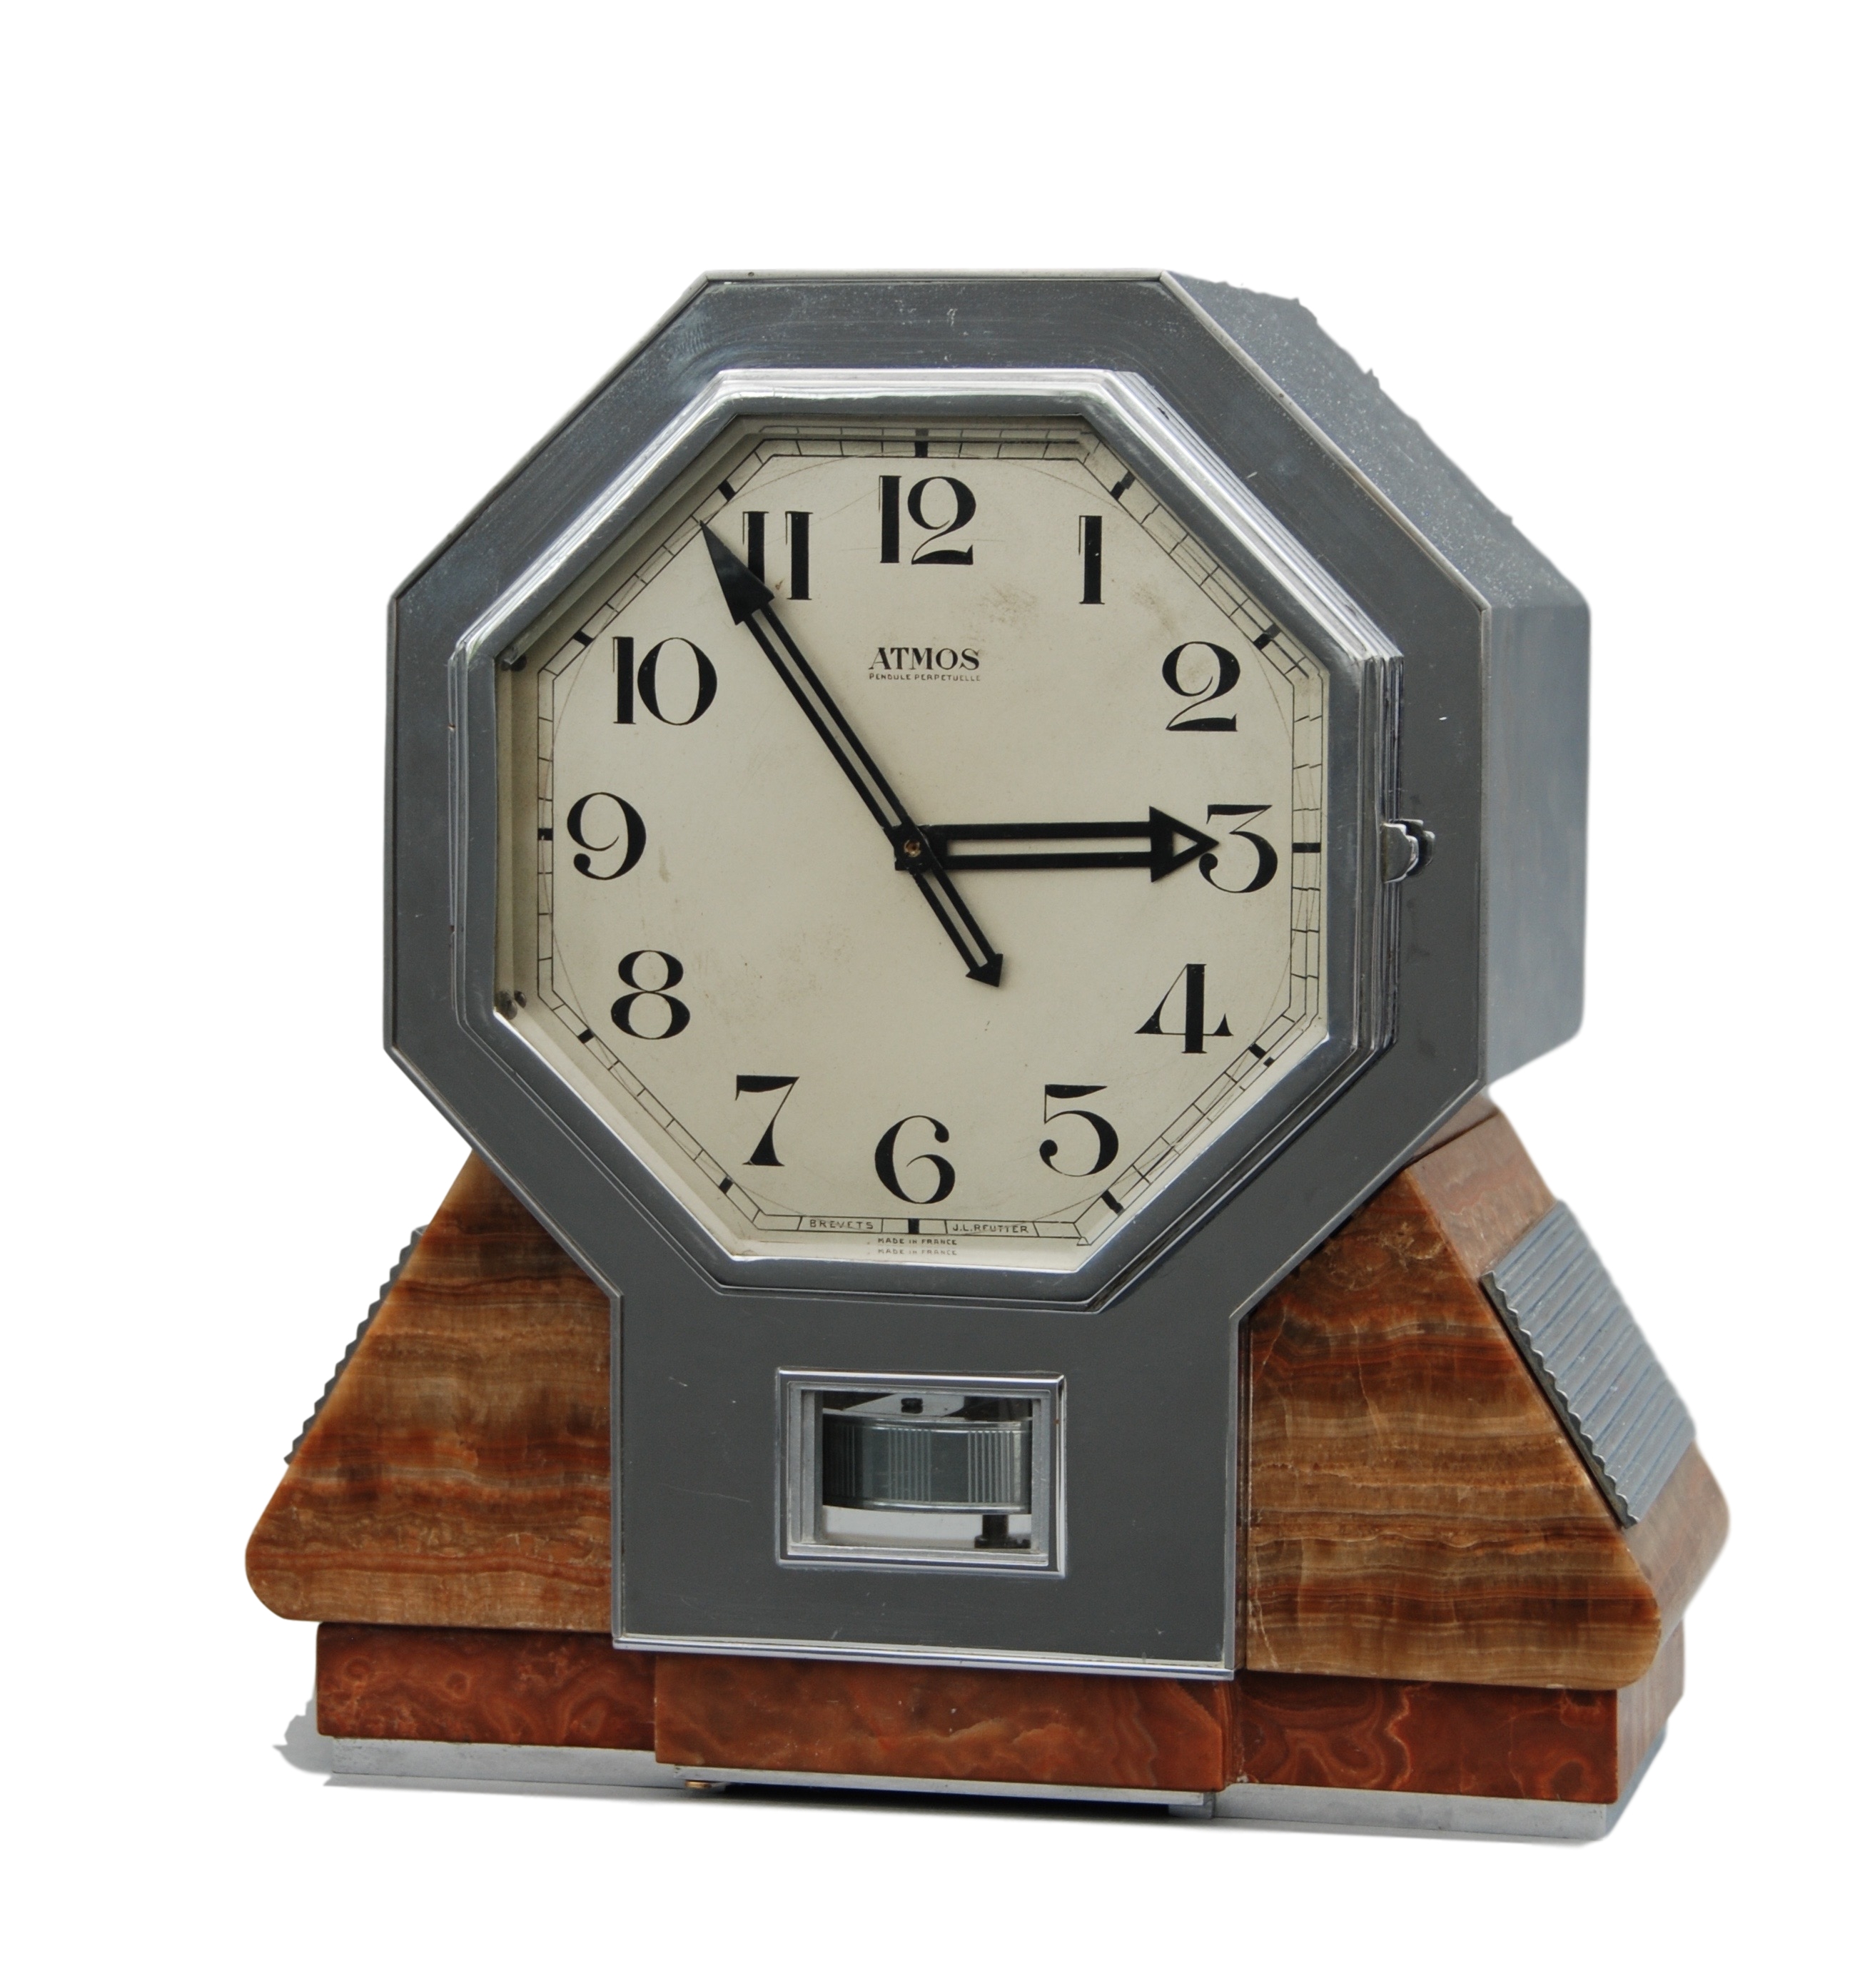 M162 JL REUTTER Atmos Clock with Mercury mechanism / Off catalog - Art Deco Z 2007) to 1931-1934